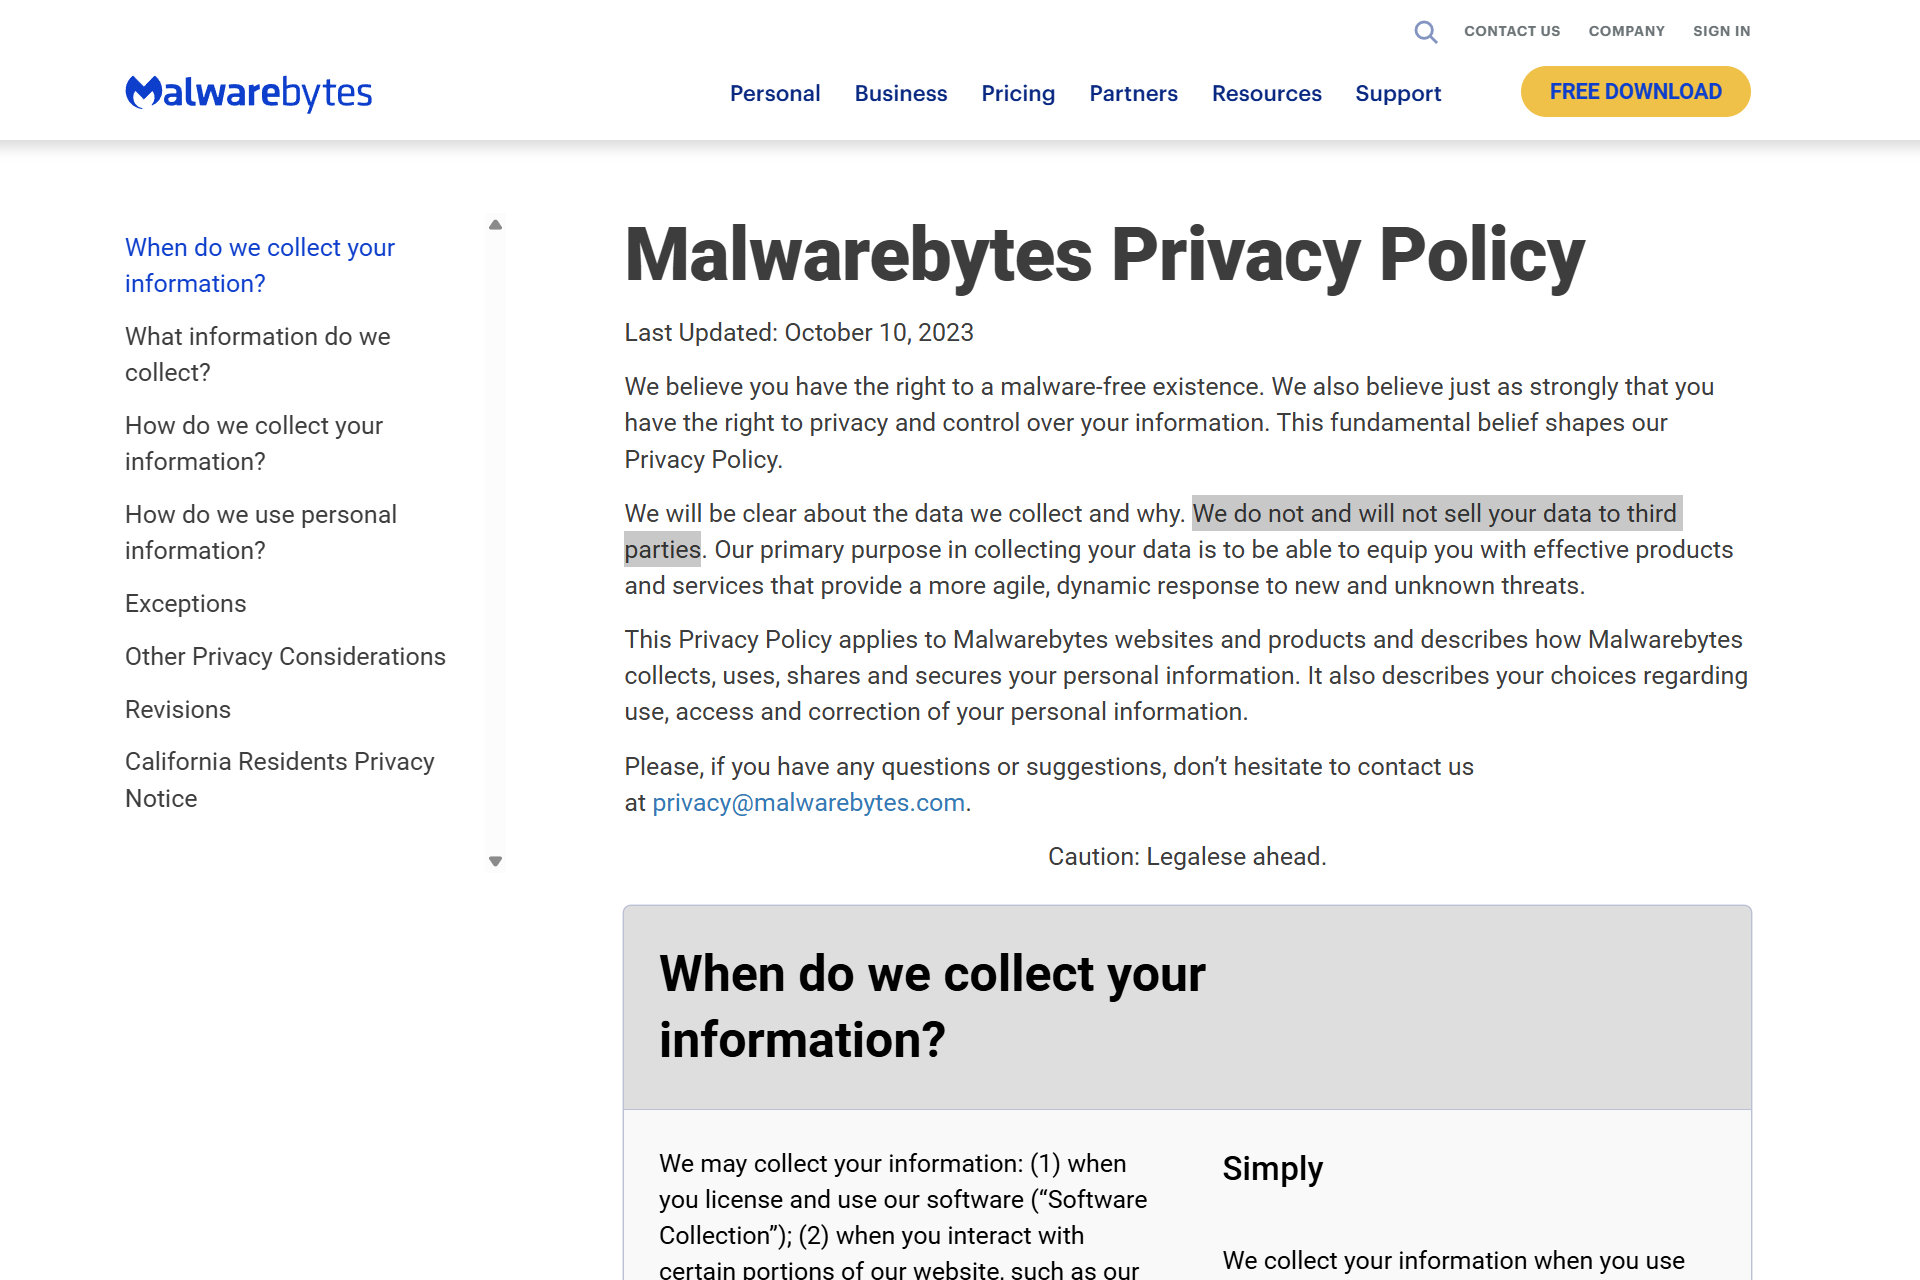 Malwarebytes 不会出售您的个人信息。